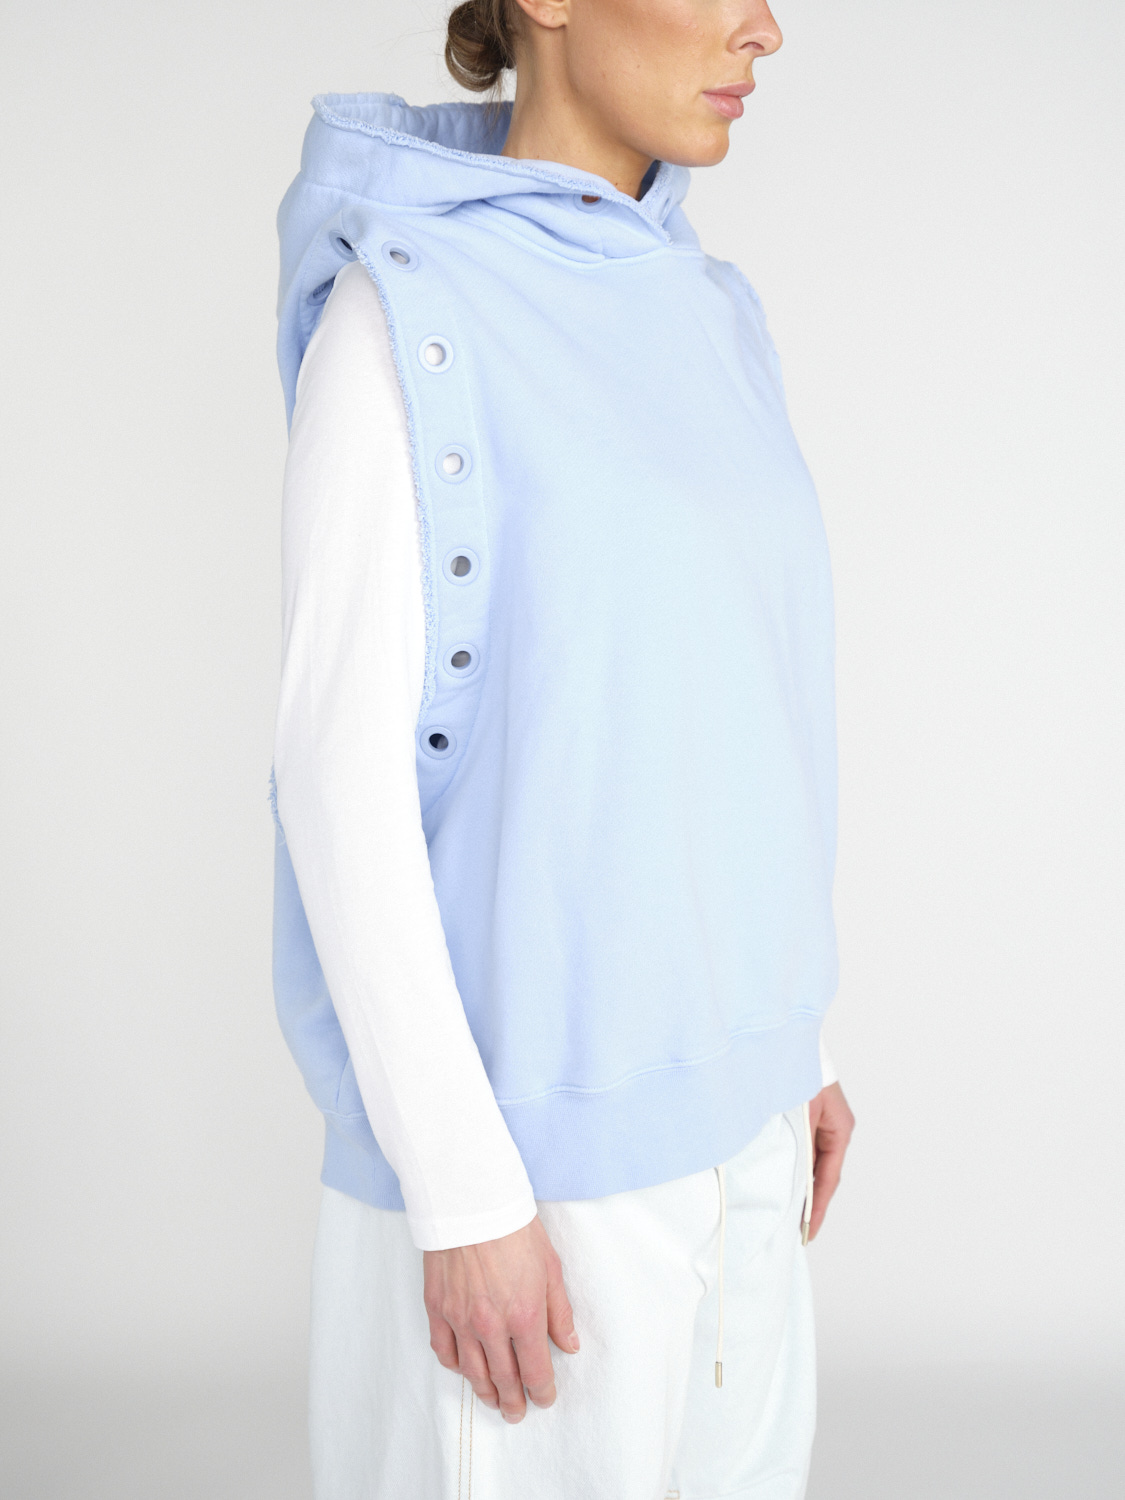 Khrisjoy Hoodie Vest – Ärmelloser Kapuzenpullover   blau XS/S